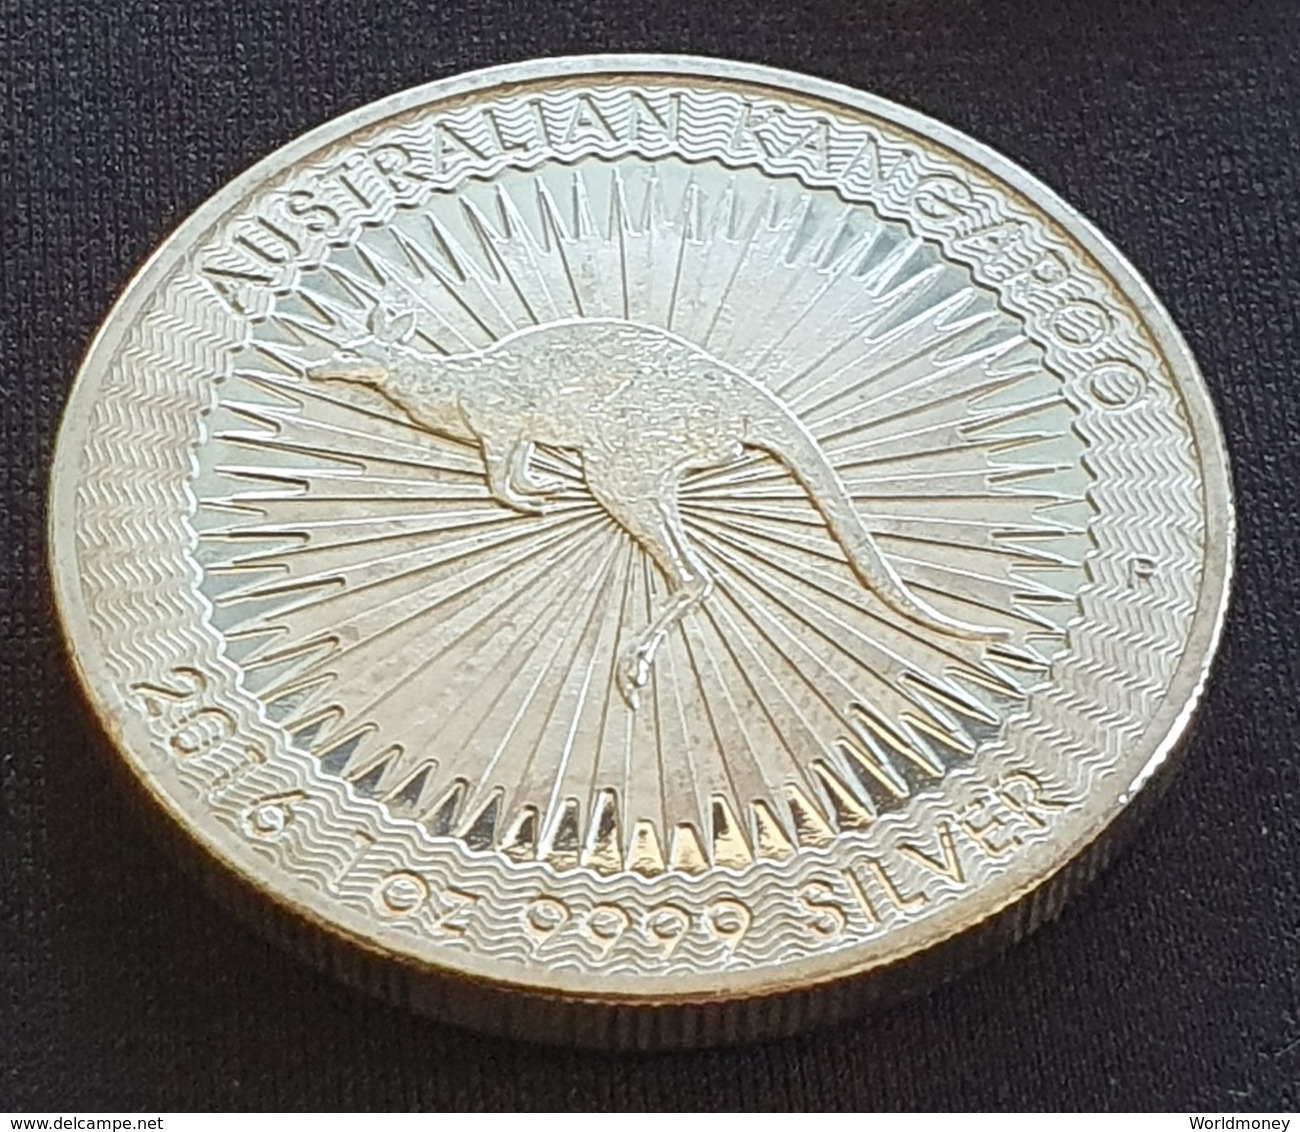 Australia 1 Dollar 2016 "Kangaroo" - Collections